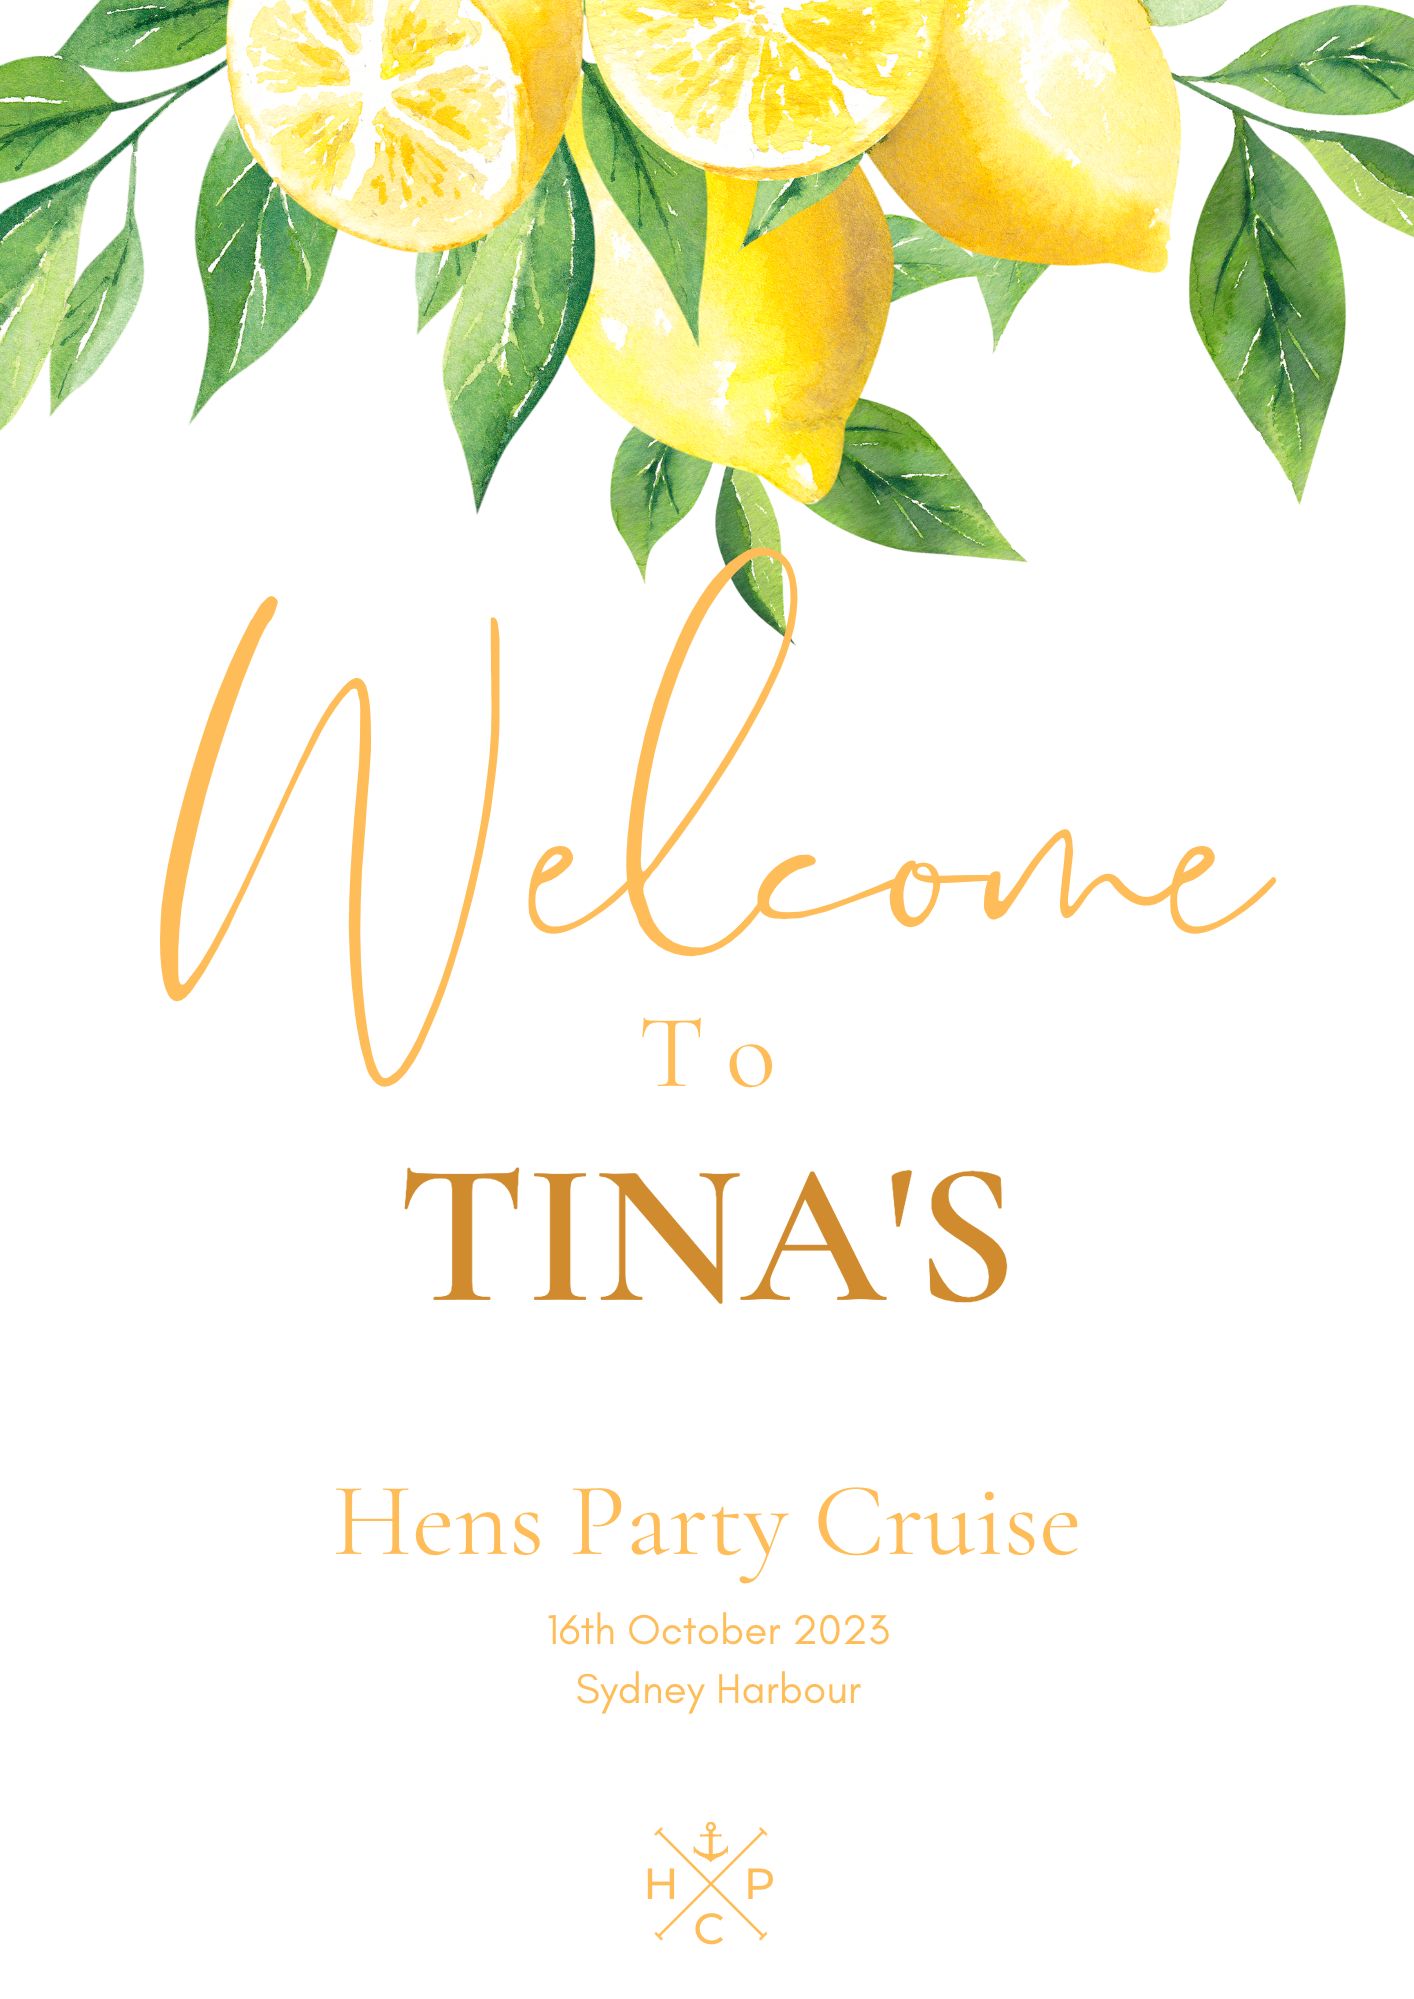 Hens Party Cruises Sydney